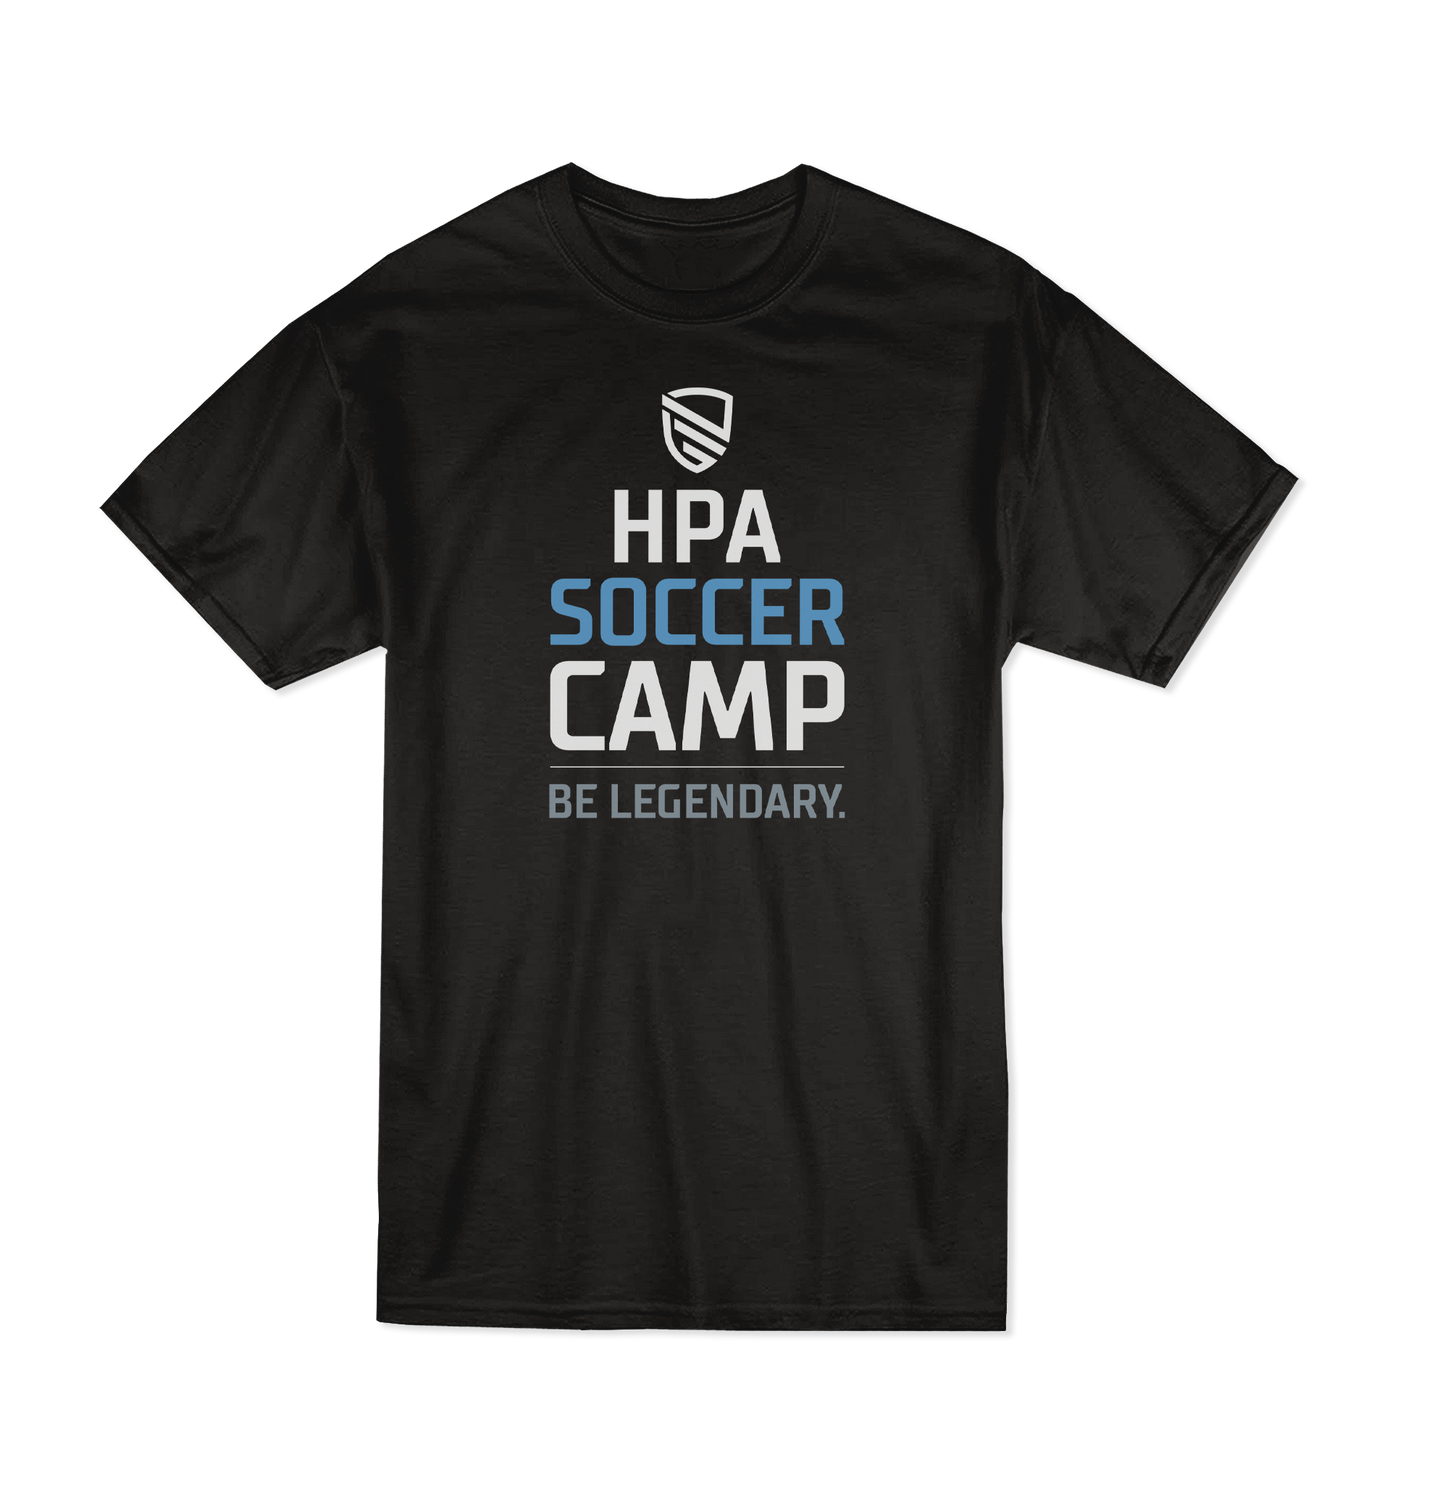 HPA Legendary Camp Tee